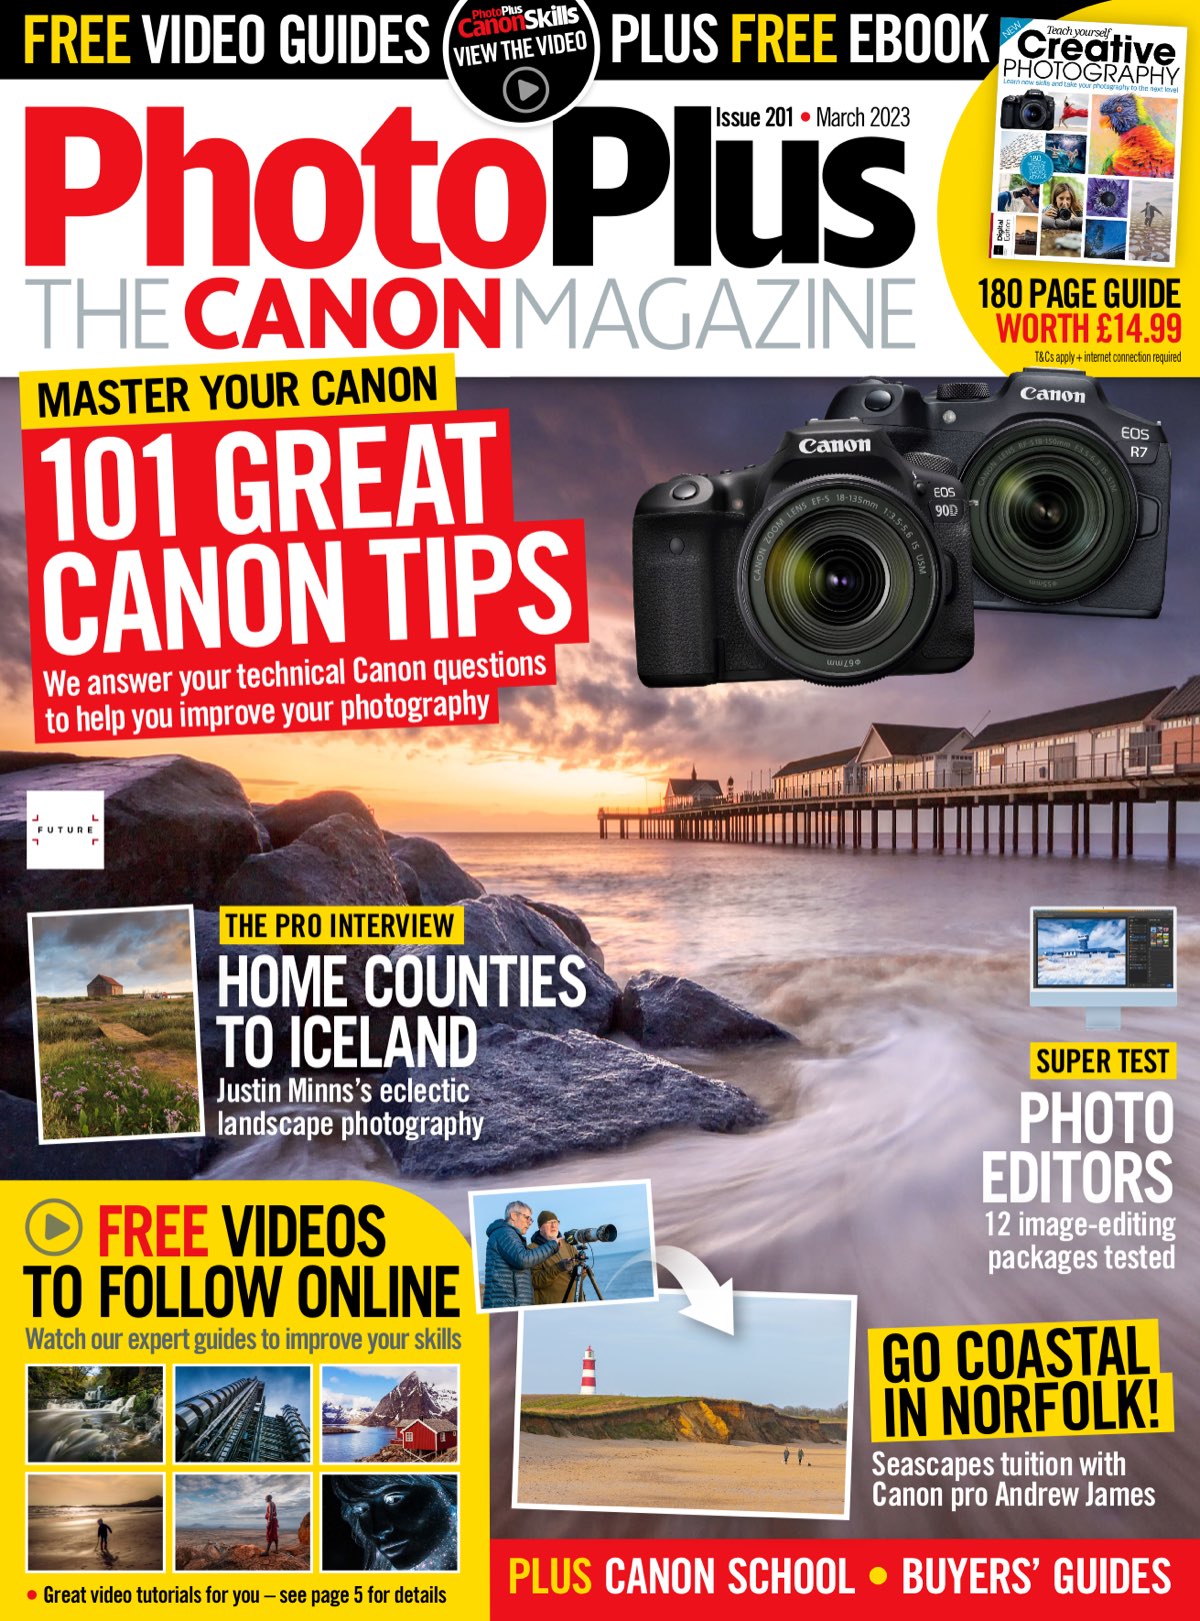 PhotoPlus The Canon Magazine - Issue 201 [Mar 2023]